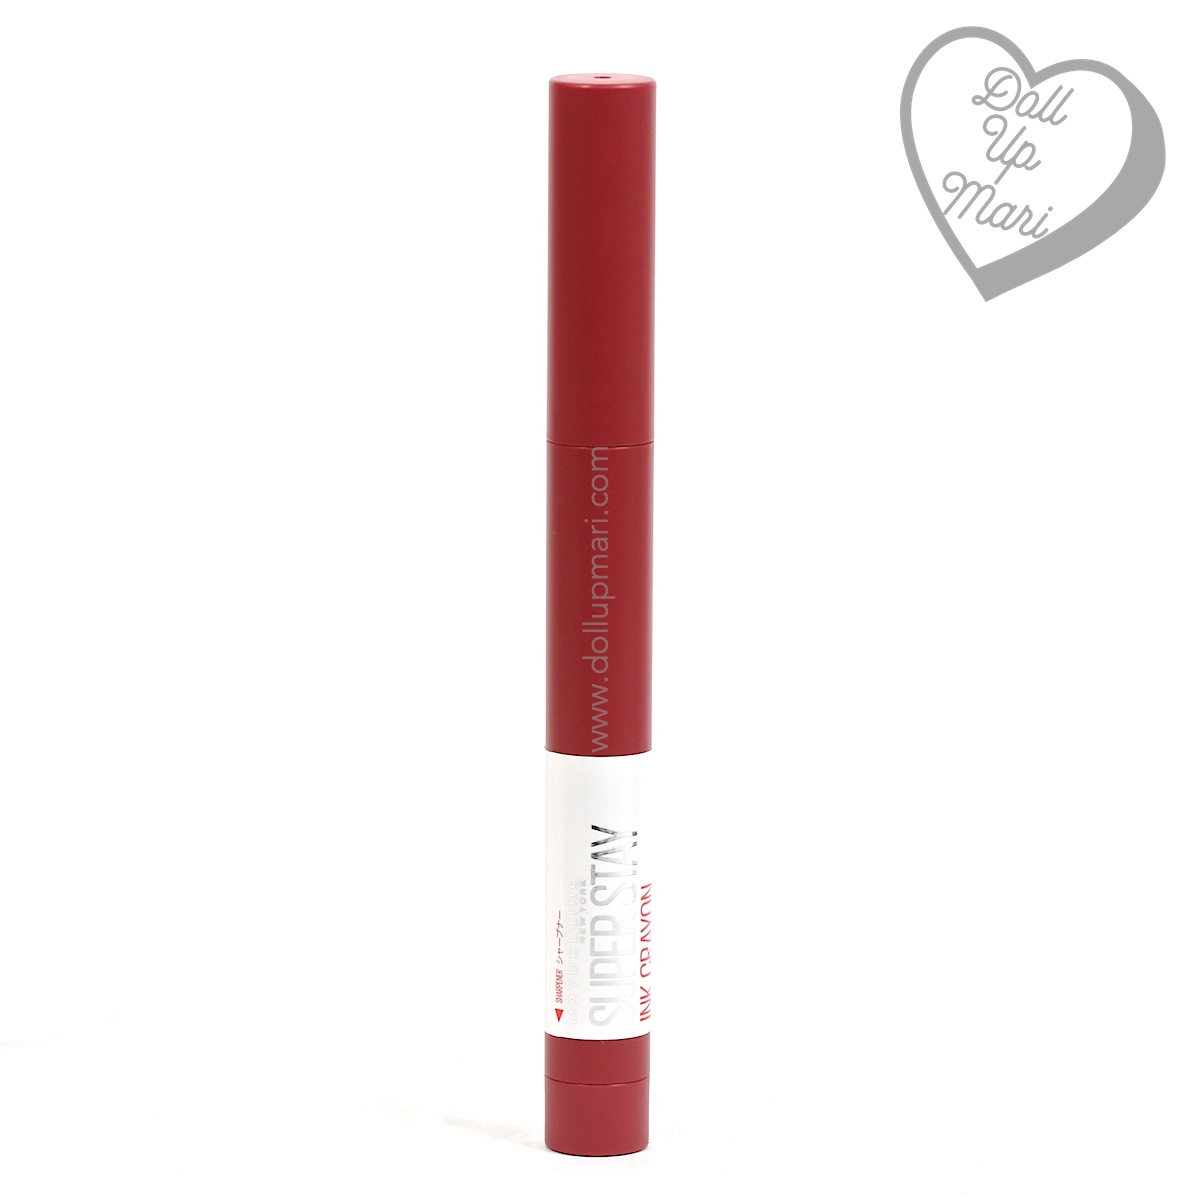 pack shot of 75 speak your mind shade of Maybelline Superstay Ink Crayon 8HR Longwear Matte Lipstick